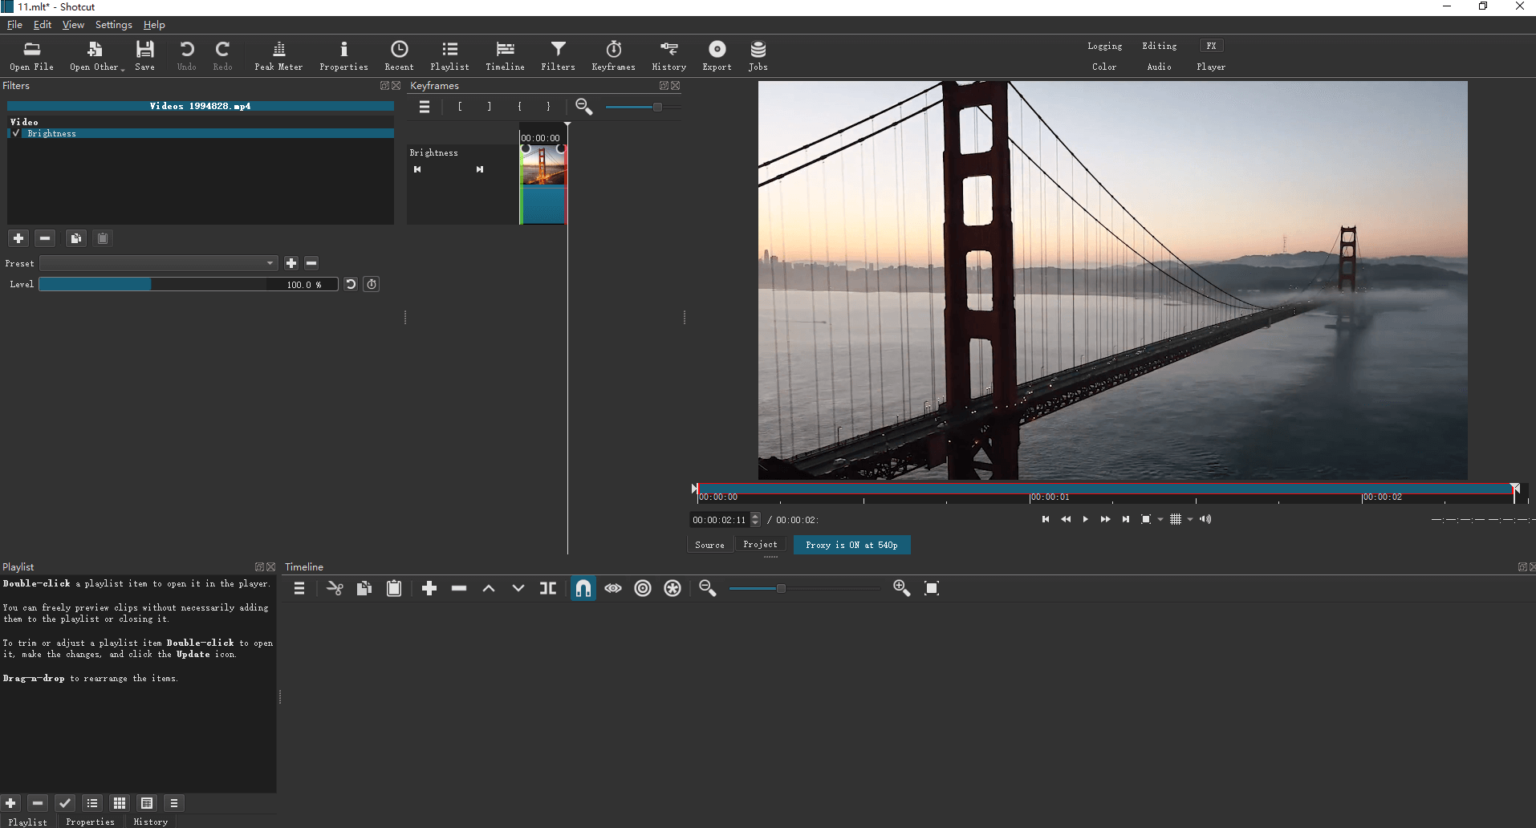 openshot video editor requirements